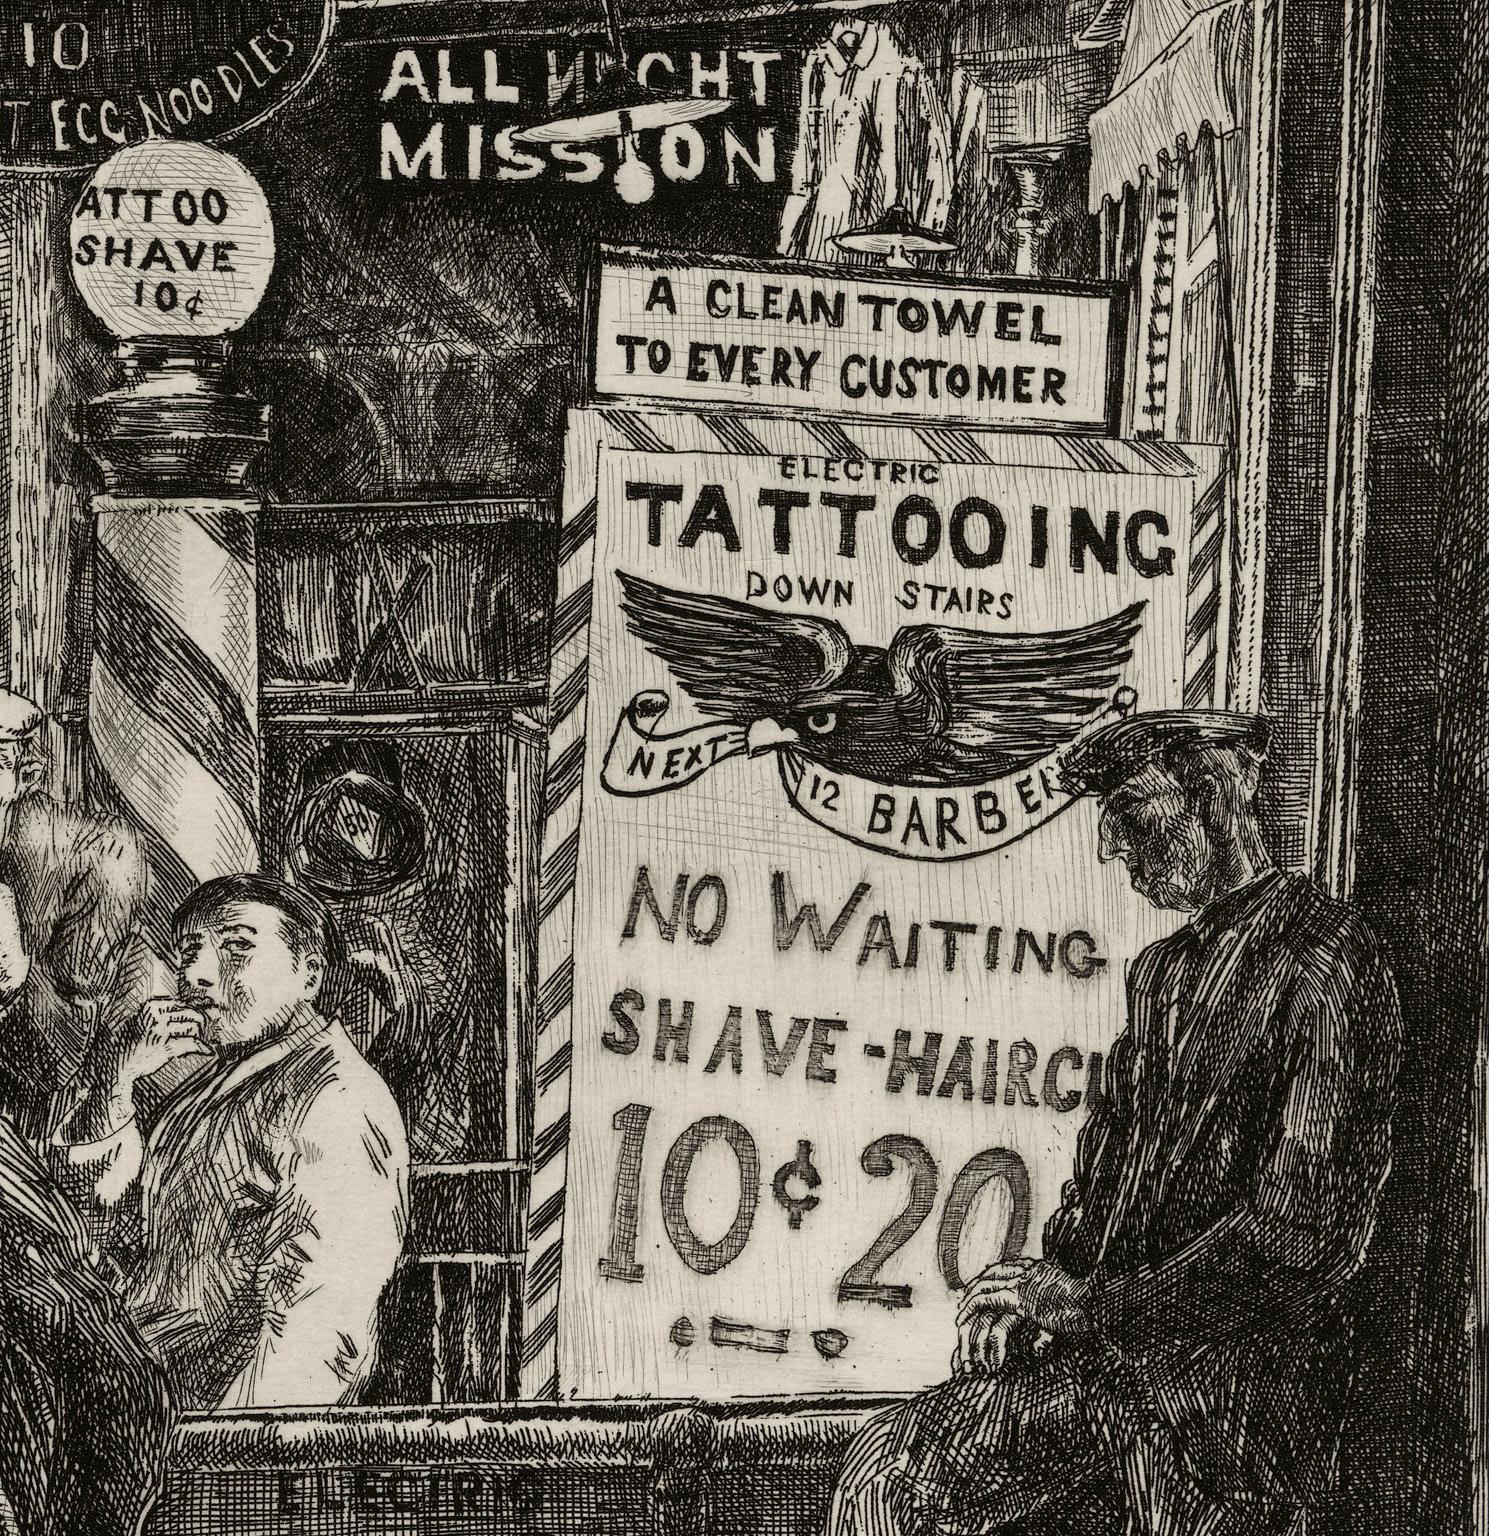 Tattoo-Shave-Haircut - American Realist Print by Reginald Marsh